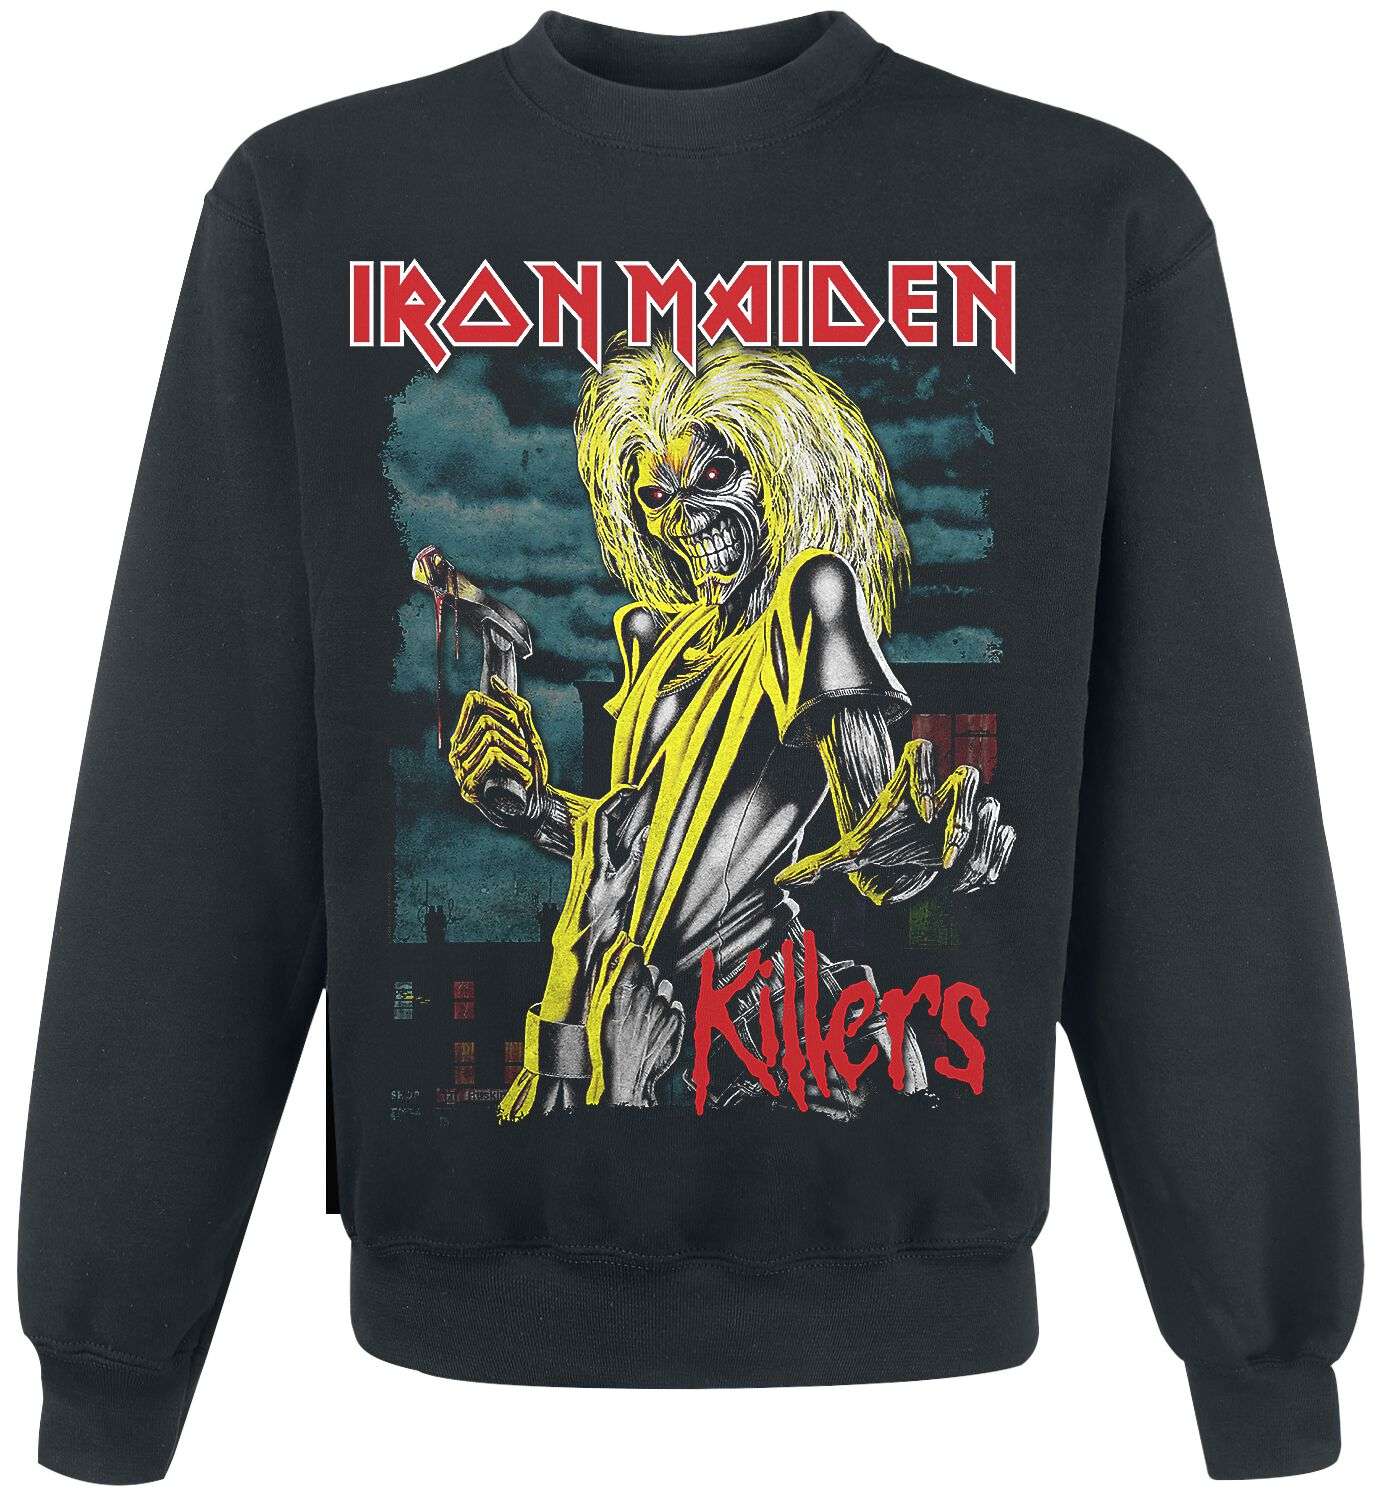 Iron Maiden Sweatshirt - Killers Green Clouds - S to XXL - for Men - black